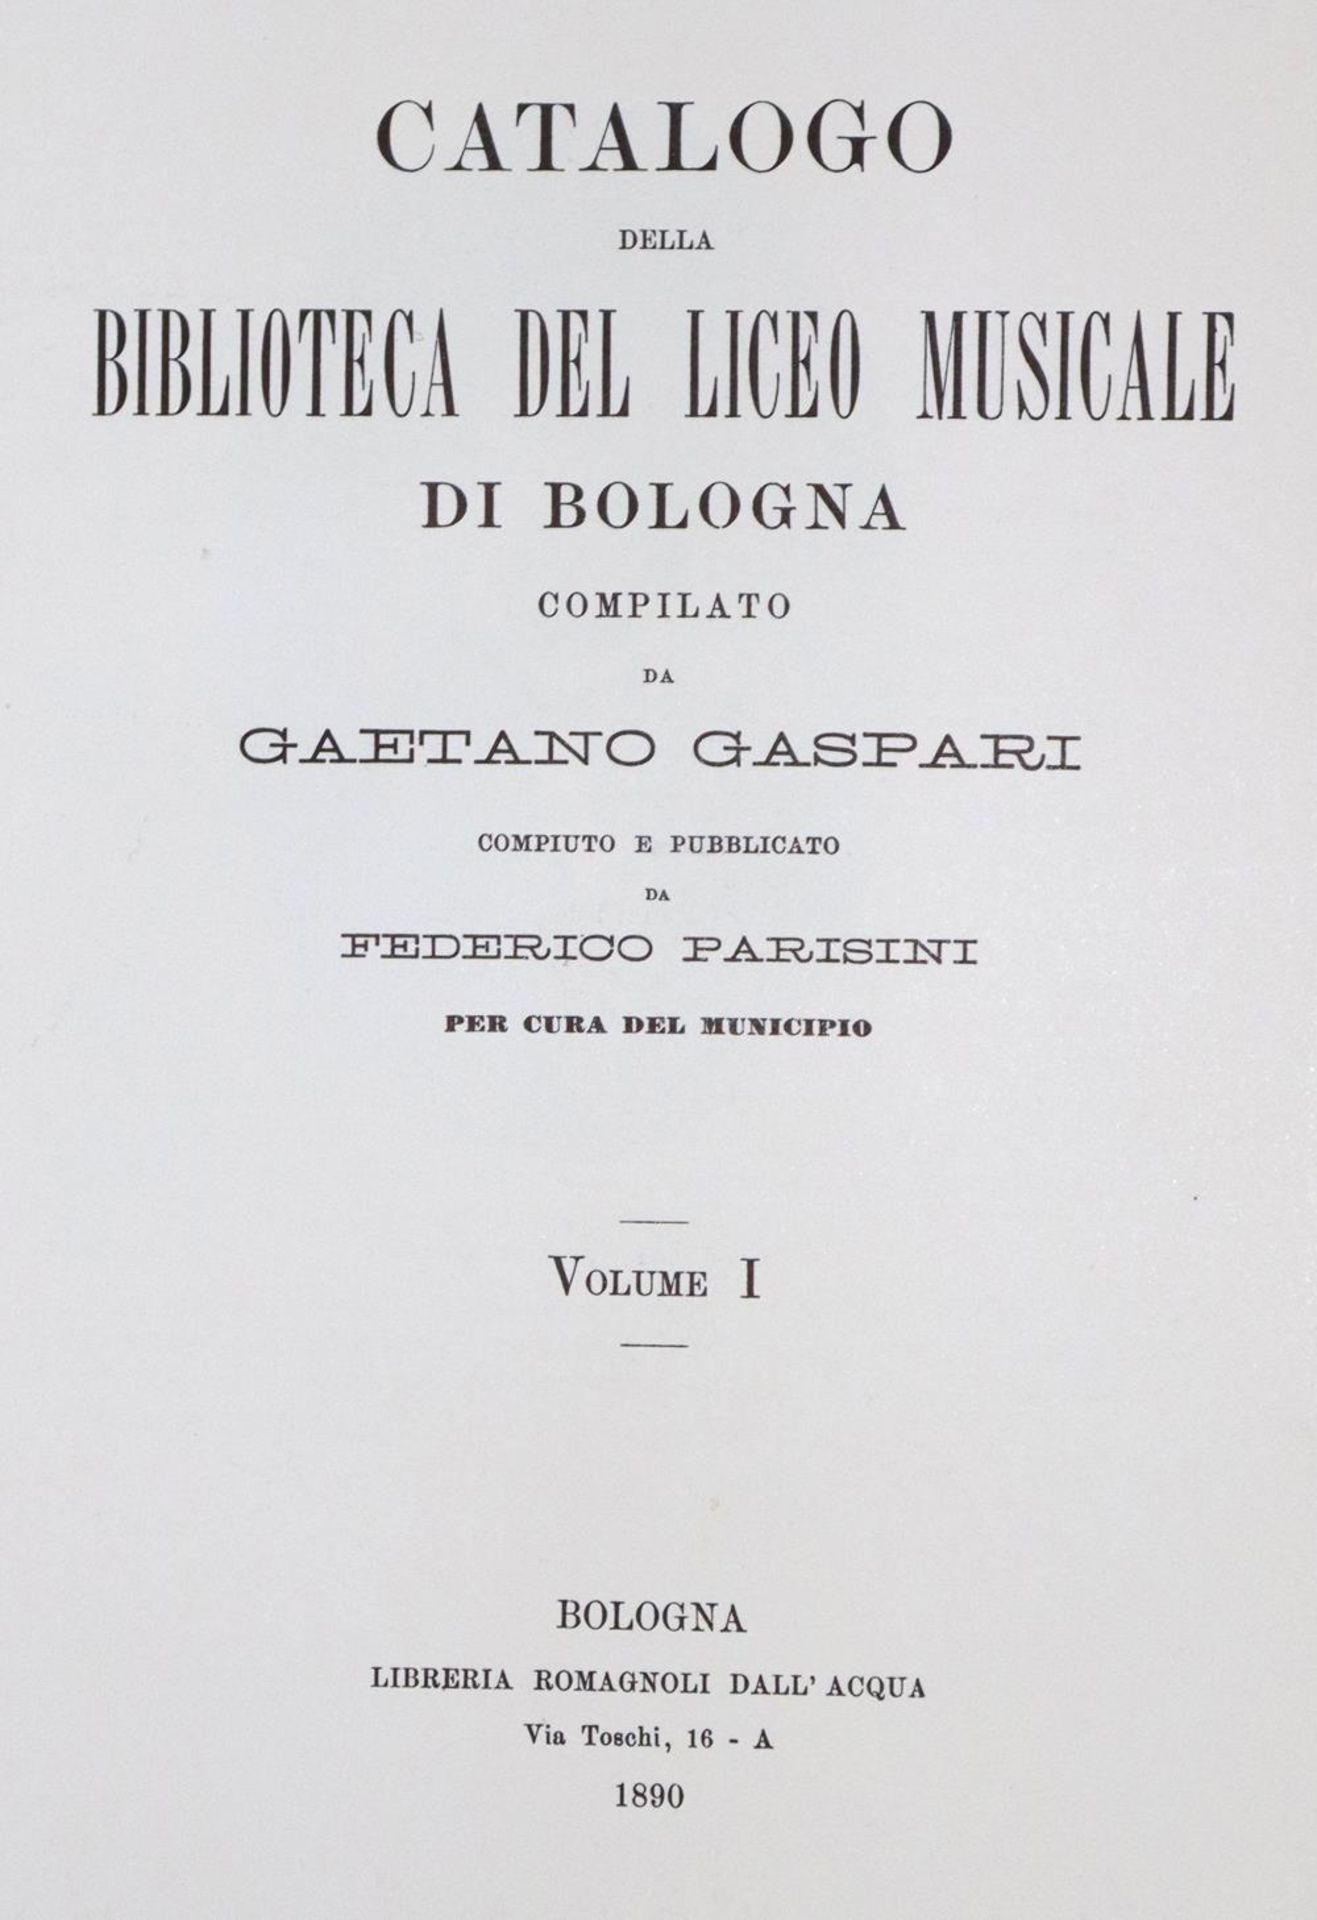 Gaspari,G.Catalogo della Biblioteca Musicale G.B. Martini di Bologna. 4 Bde. Anastatischer Nachdruck